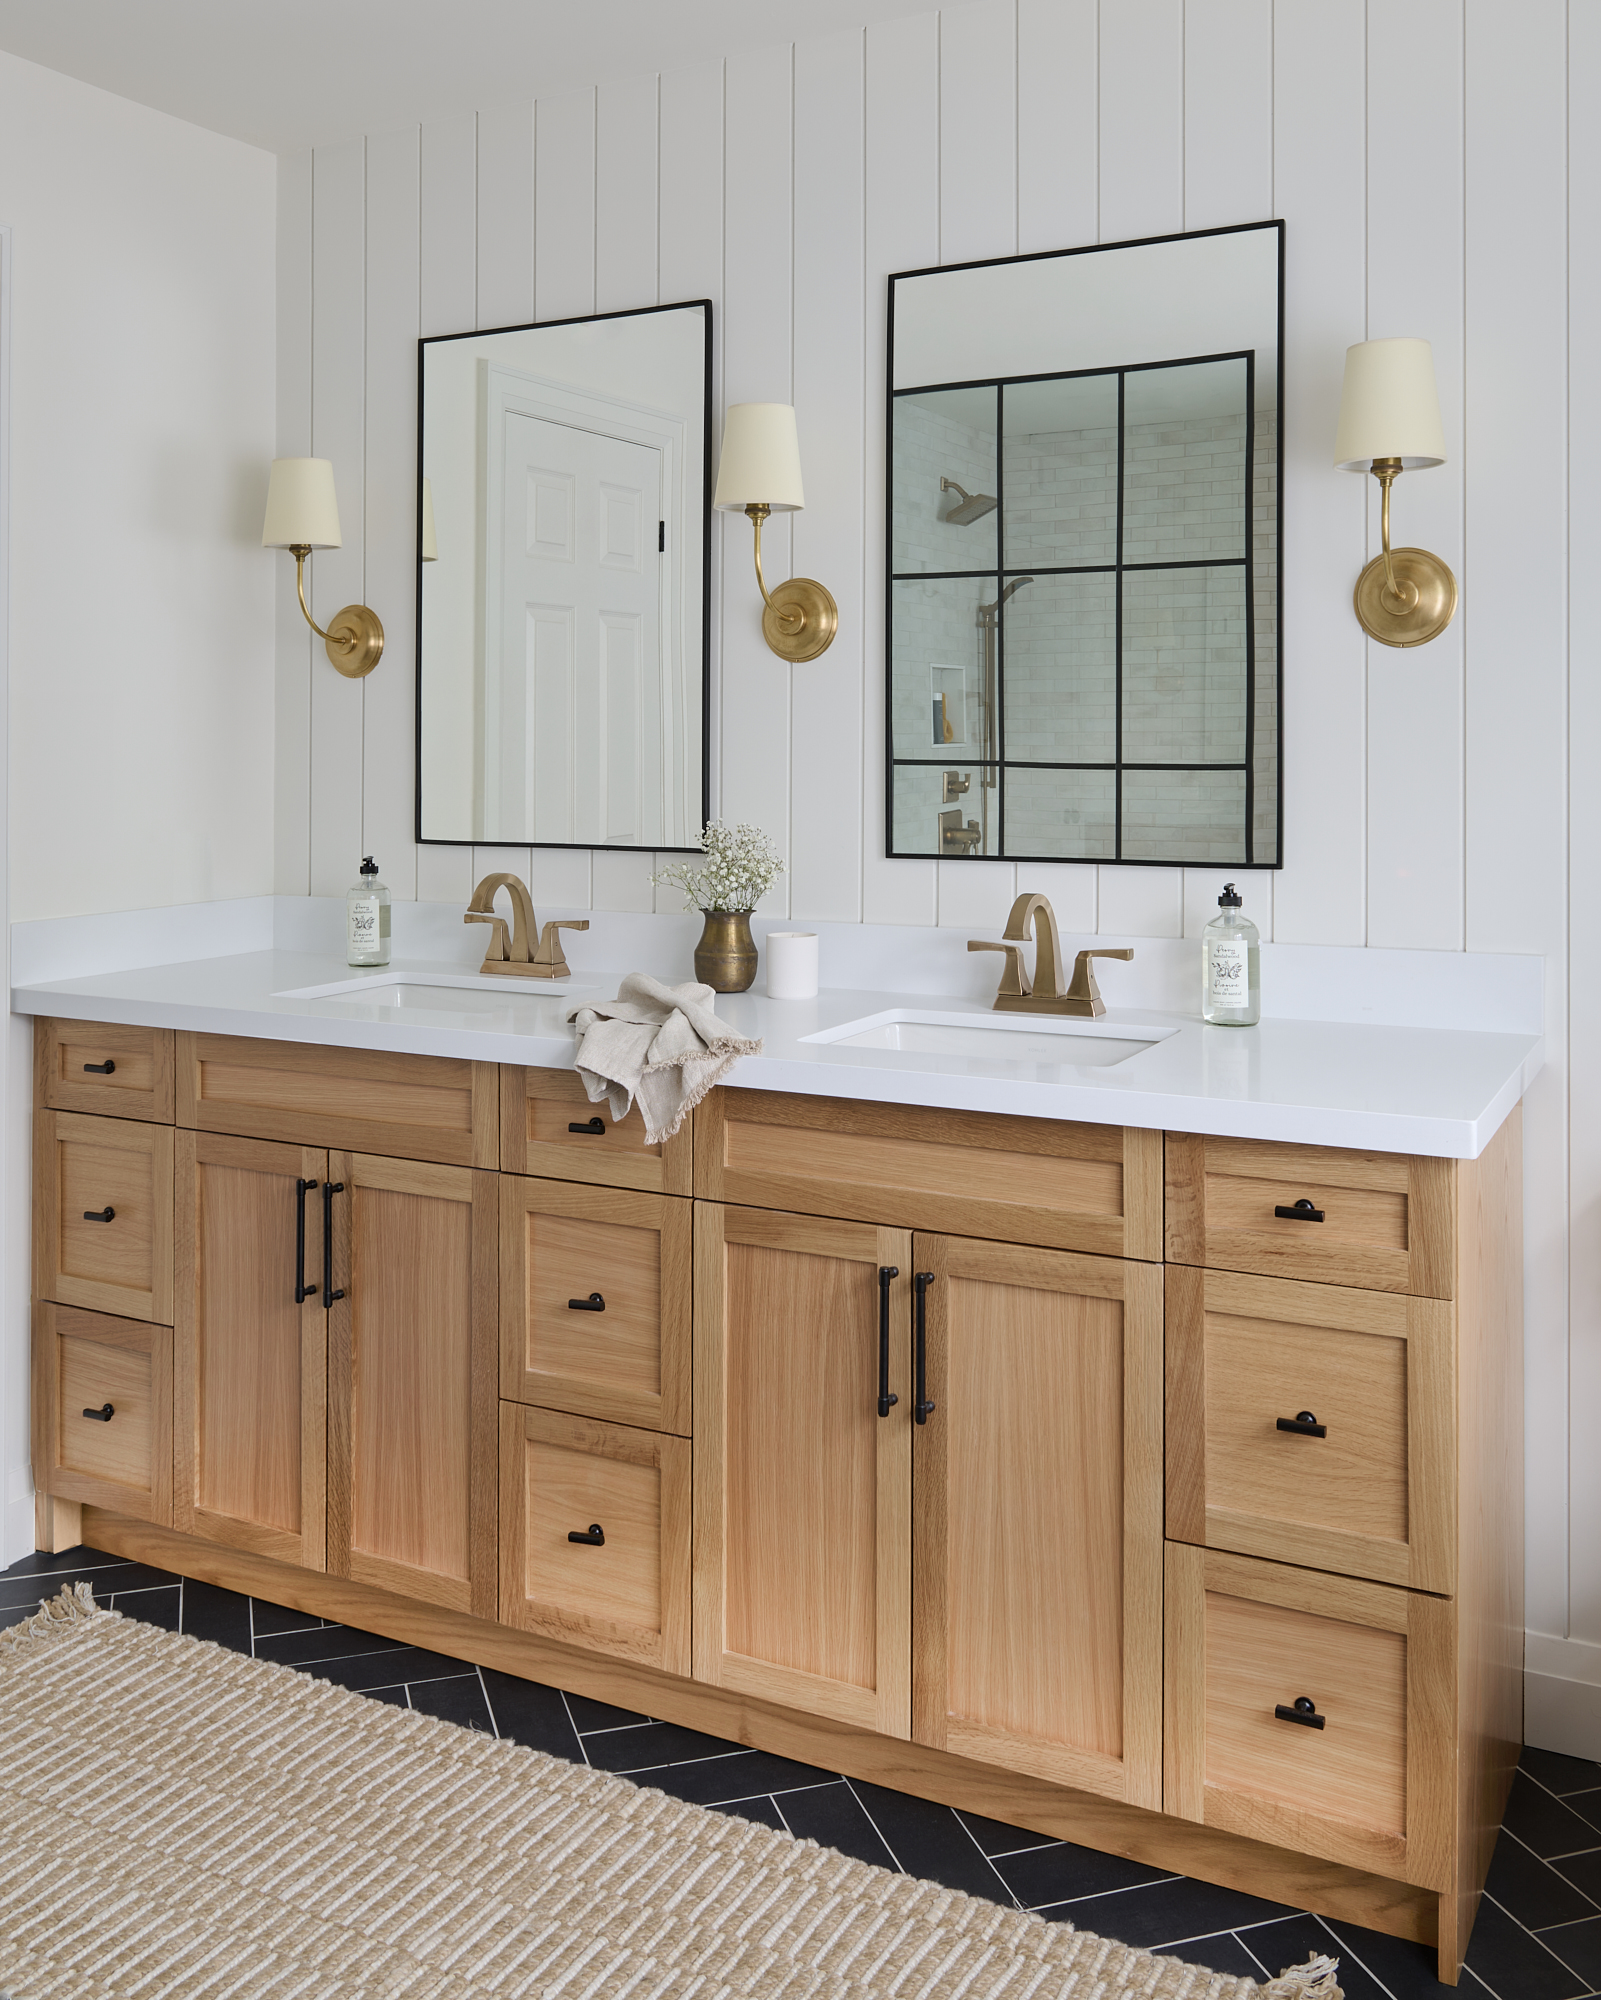 bathroom interior designed with oak wood vanity, nickel gap wall detail, gold plumbing fixtures and decorative sconces 